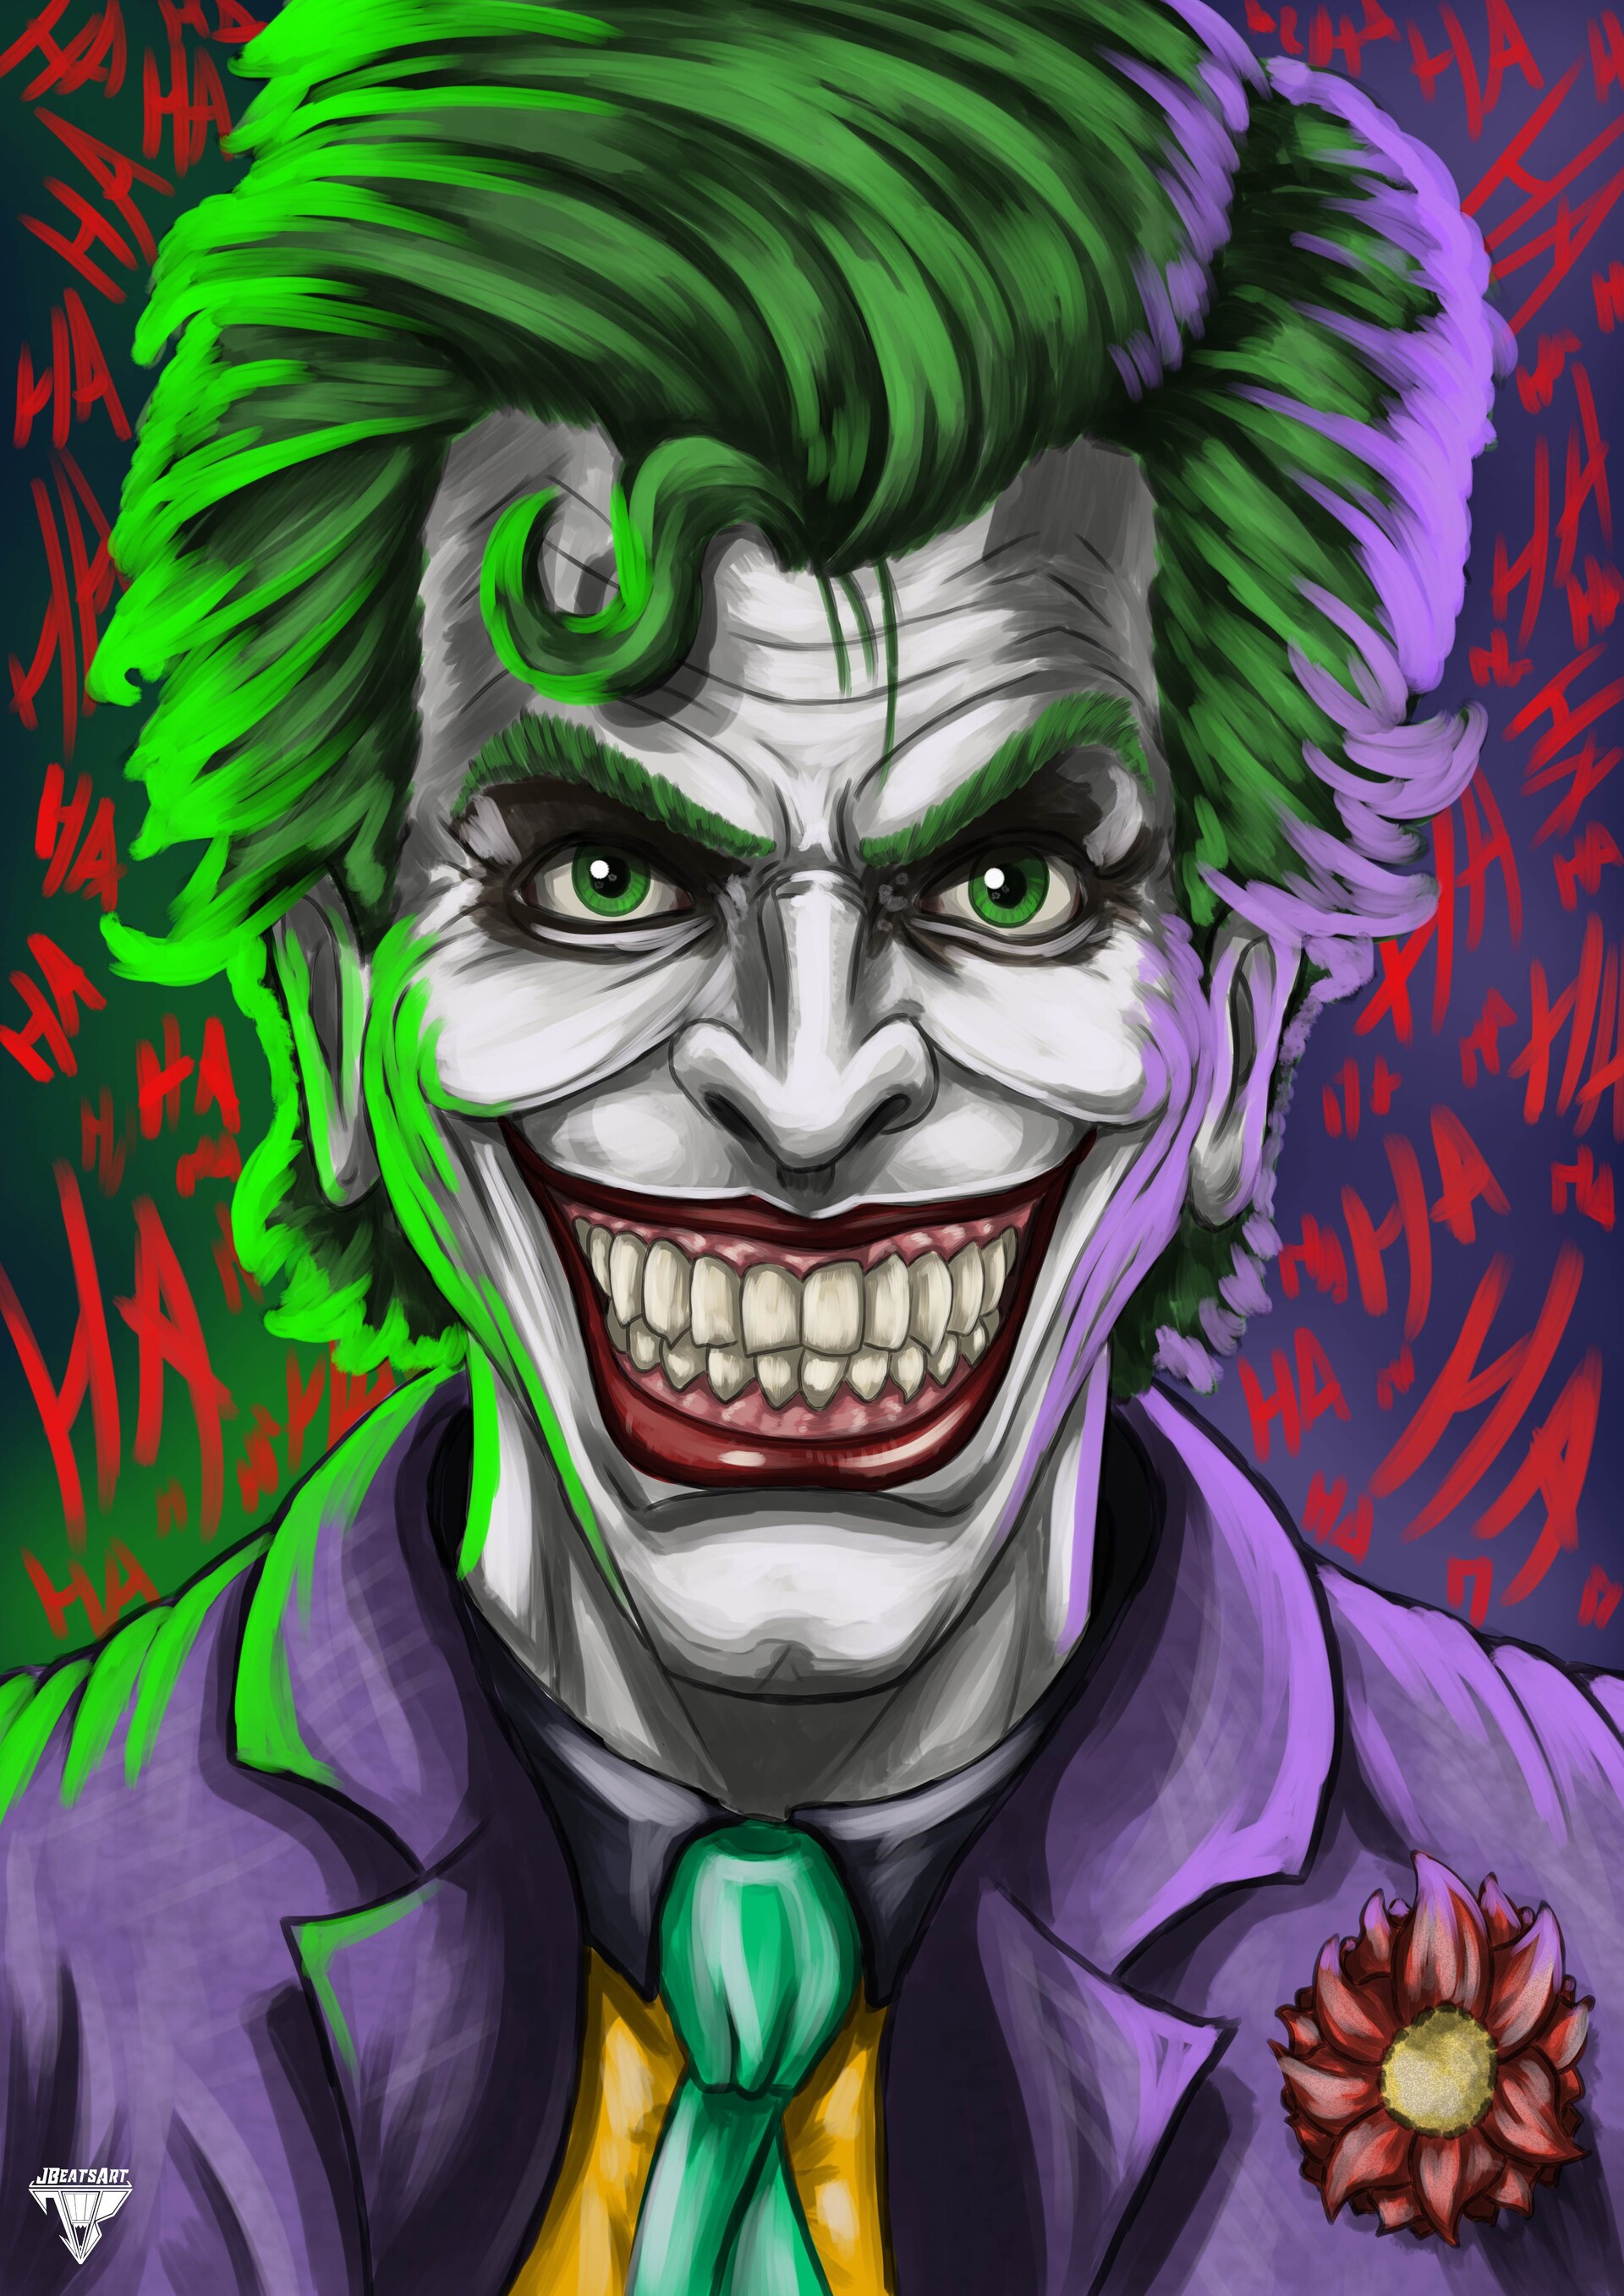 ArtStation - Joker comic style